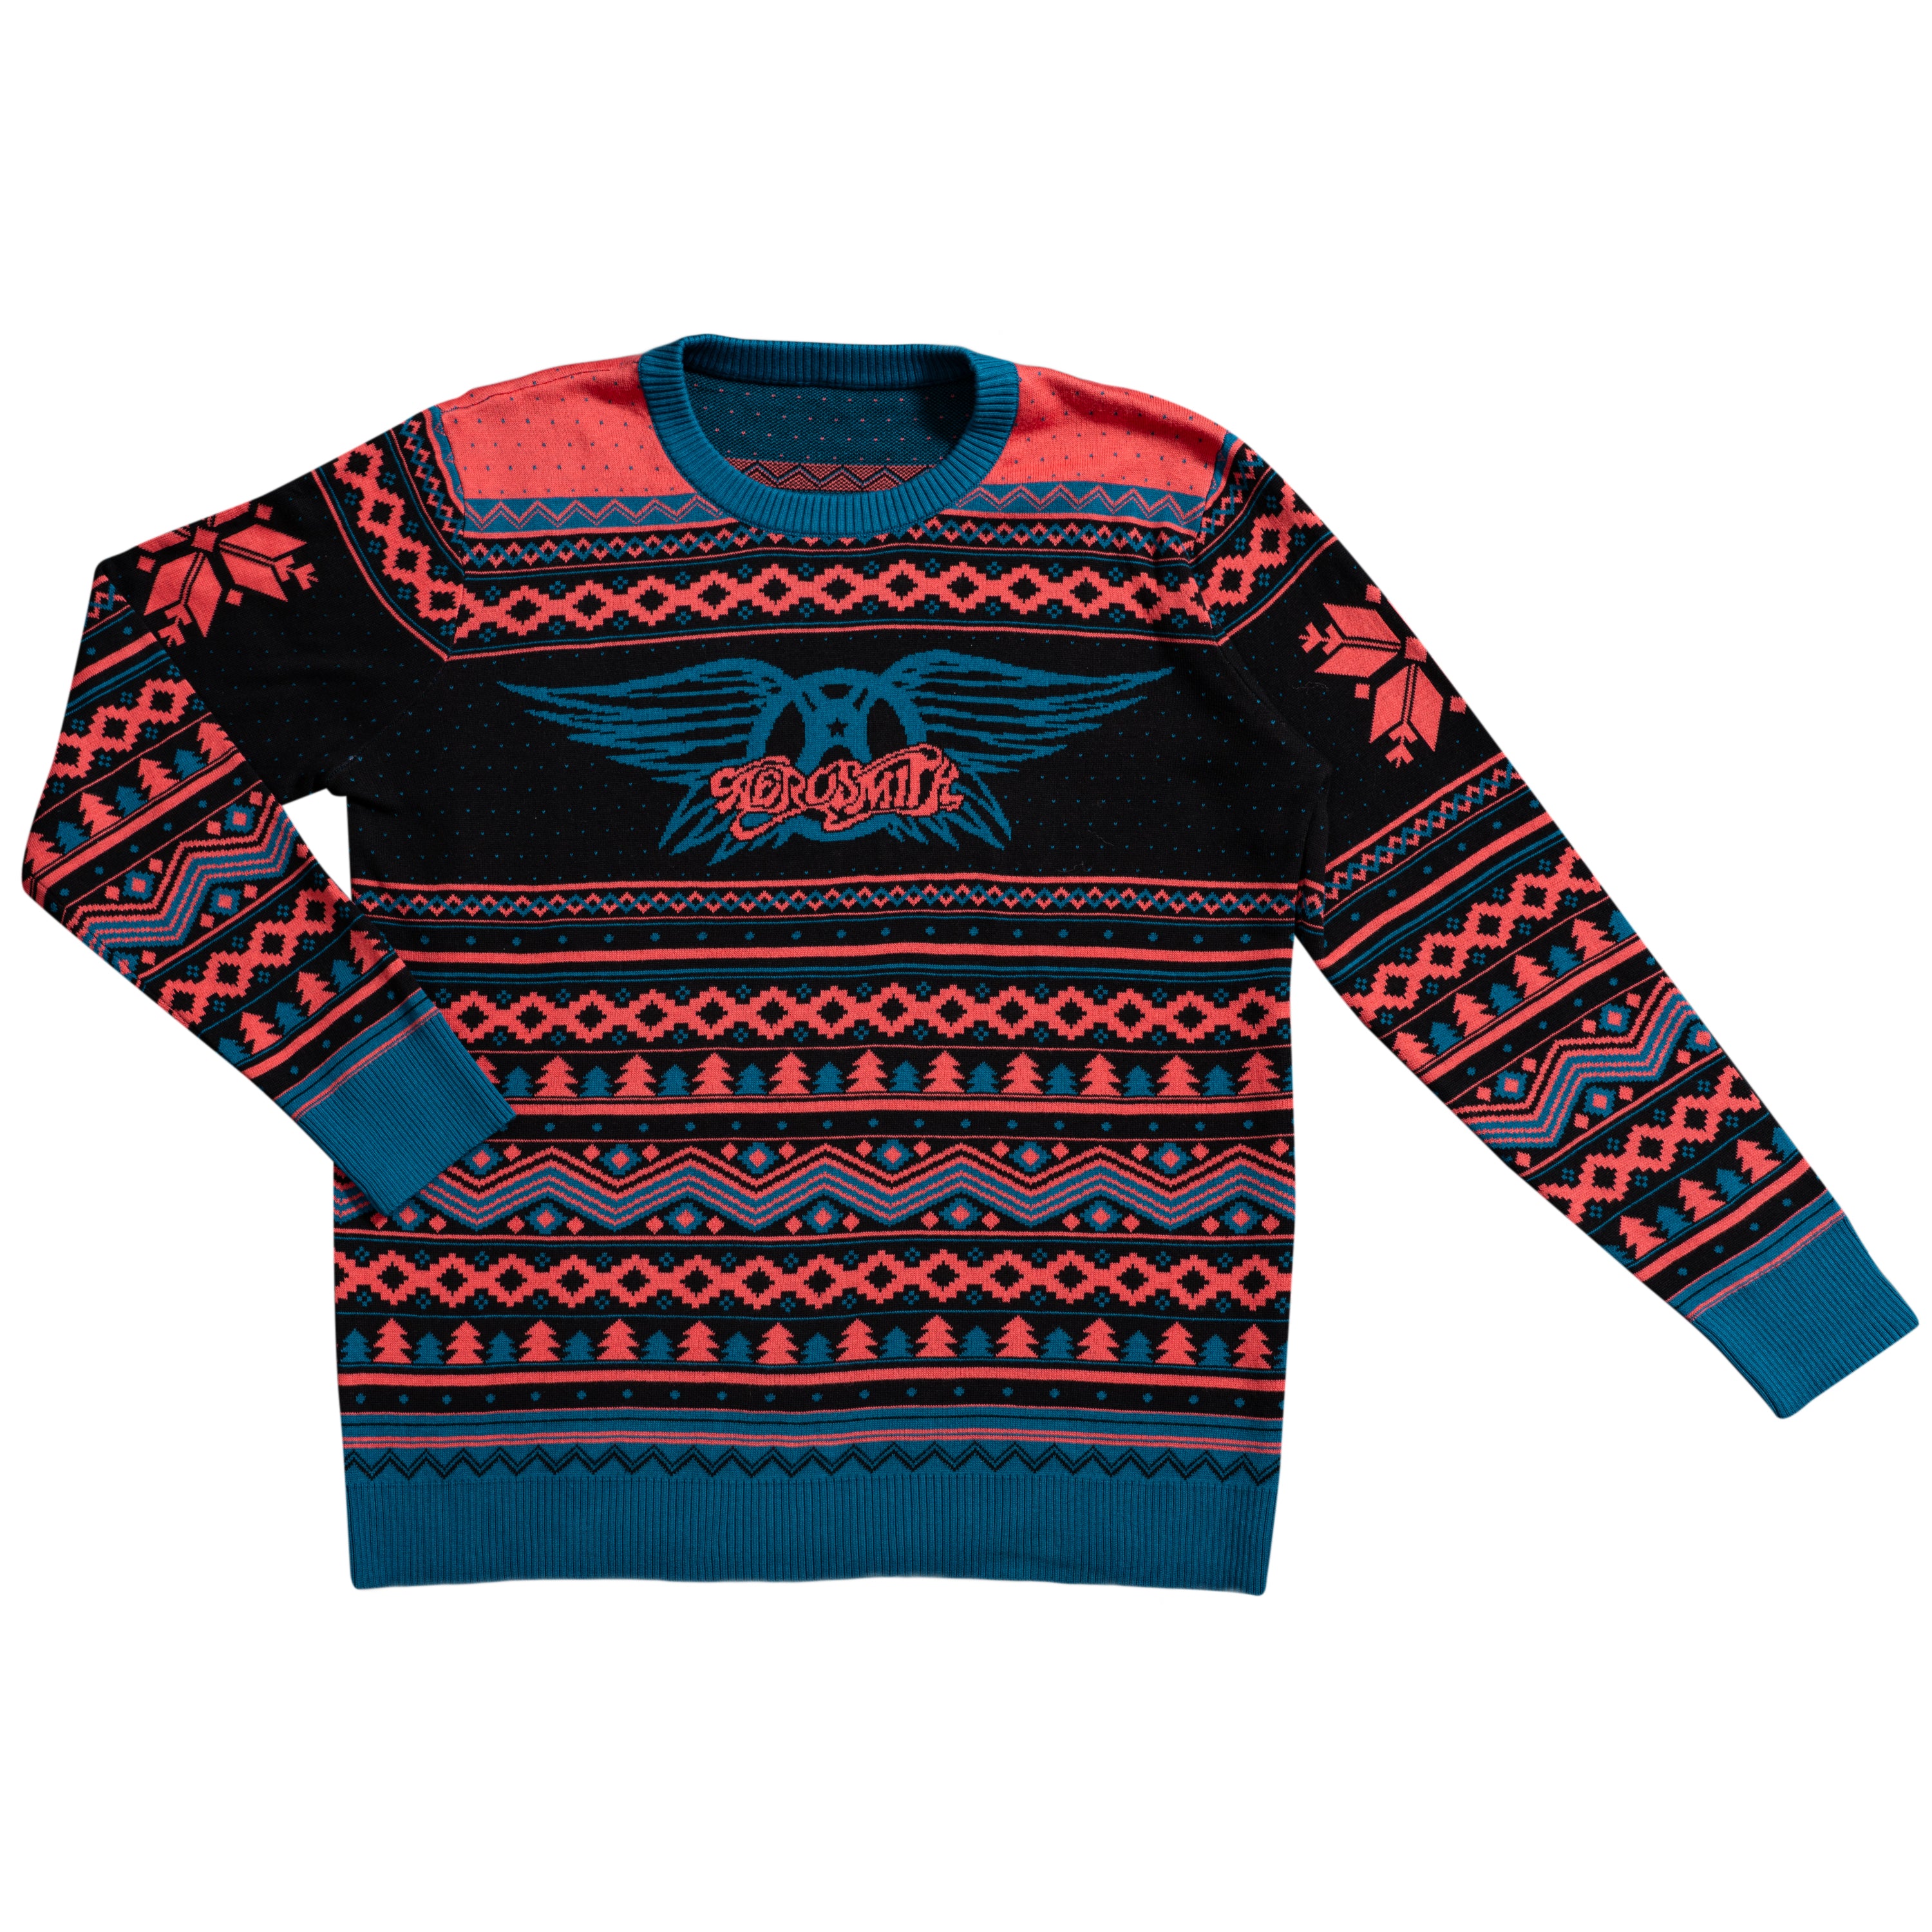 Aerosmith Wings Ugly Christmas Sweater